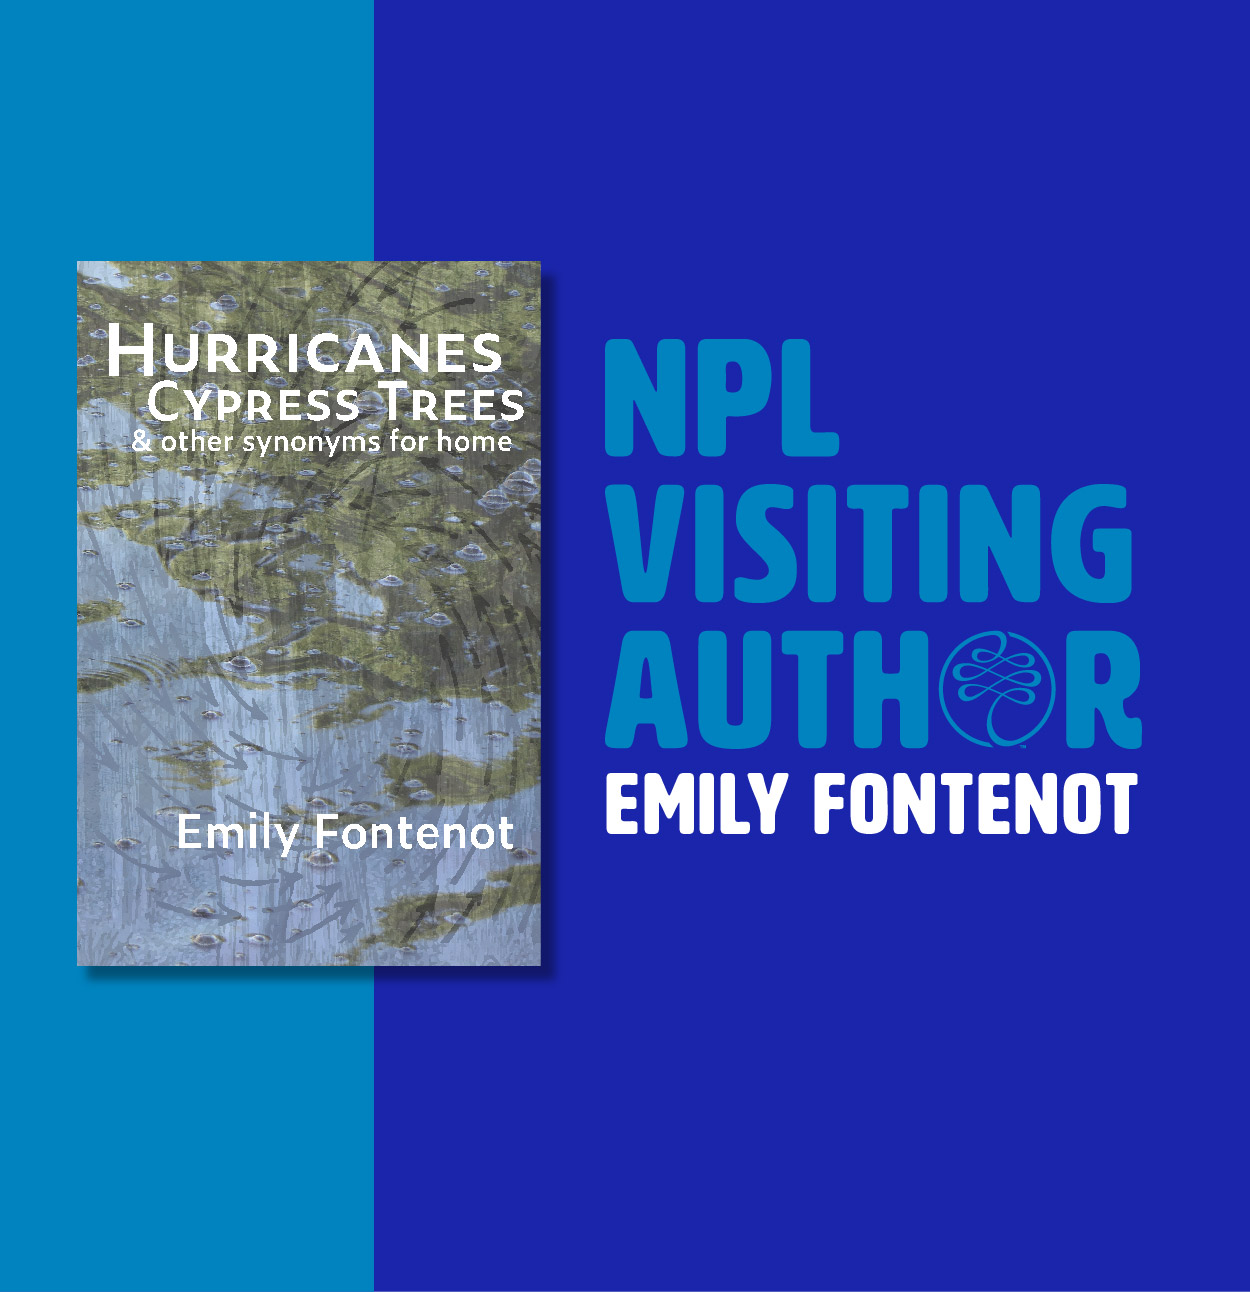 NPL Visiting Author Emily Fontnot